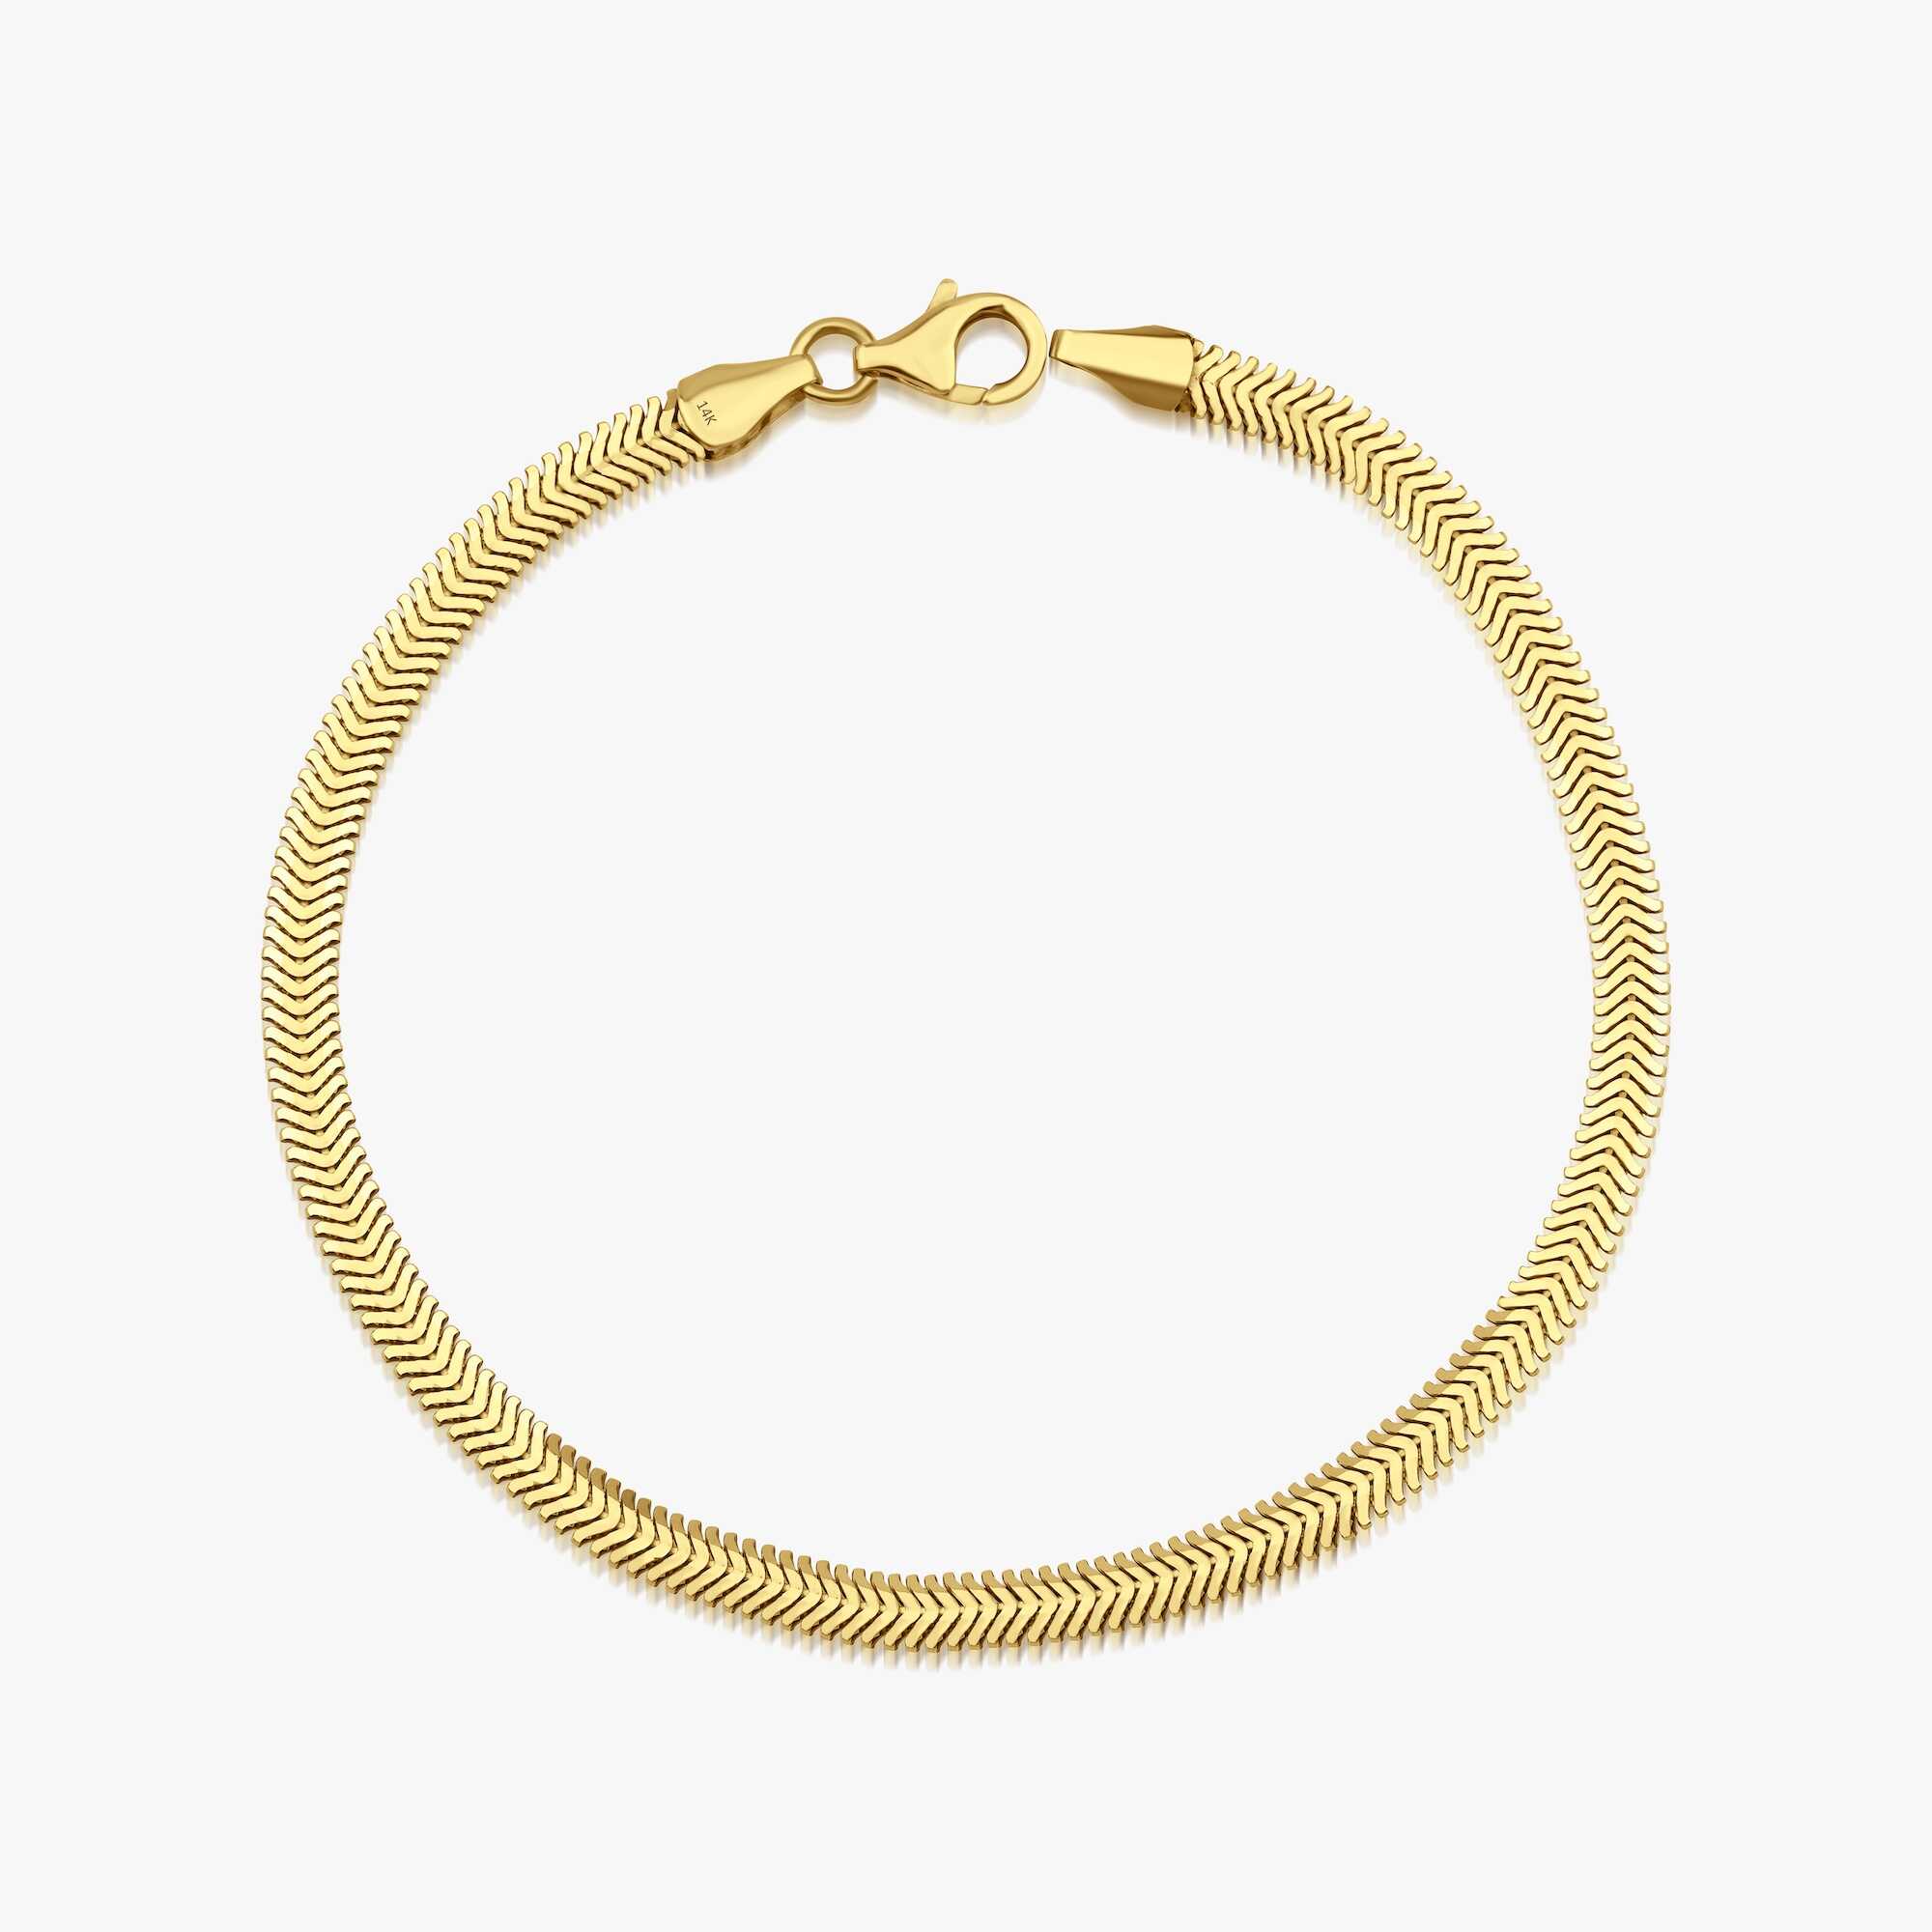 Snake Chain Bracelet in 14K Gold